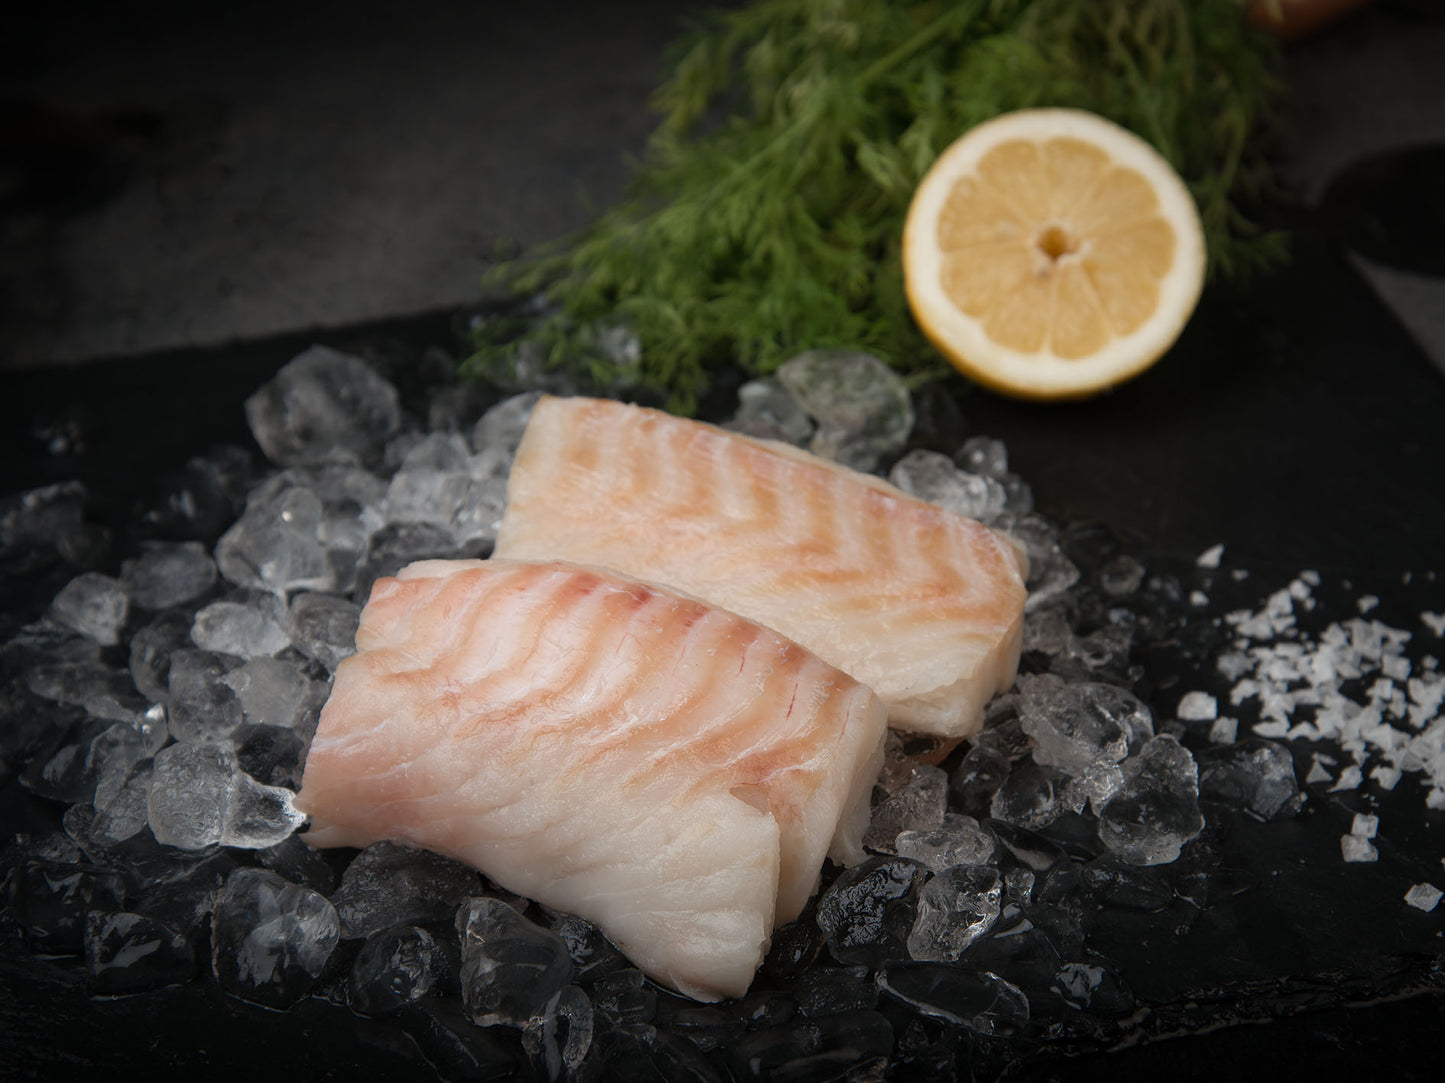 Torsk köpa Torskrygg köpa fisk köpa skaldjur hemleverans stockholm fisk och skaldjur av finaste kvalitet fiskbilen Sigges fisk